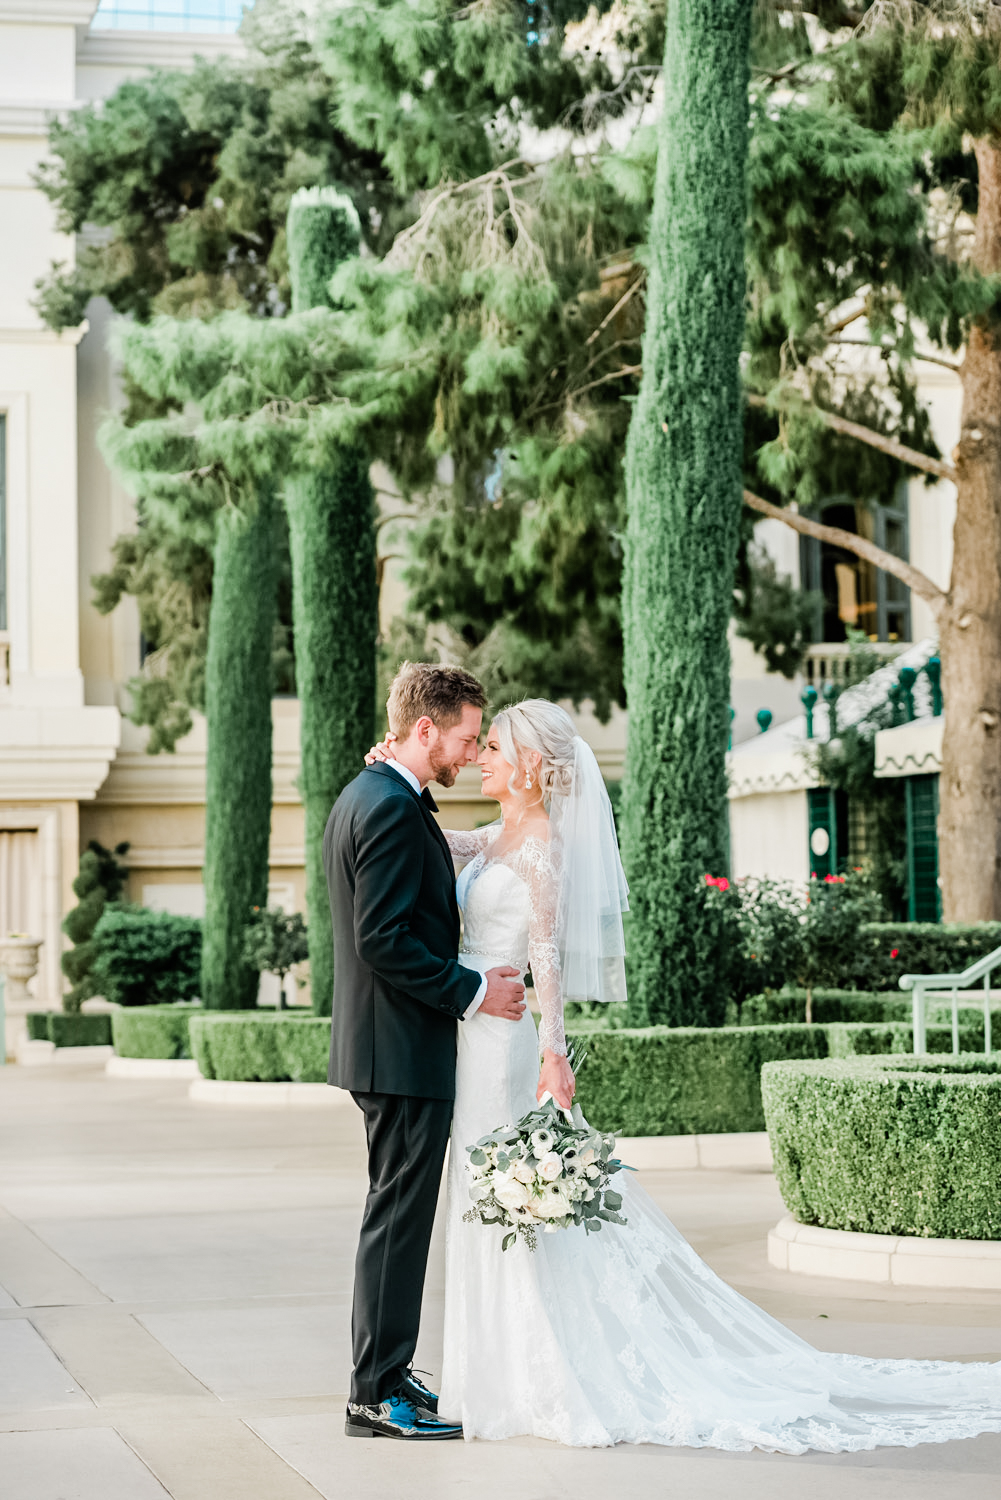 Bellagio Las Vegas Wedding | Kristen Marie Weddings + Portraits | Las Vegas Wedding Photographer